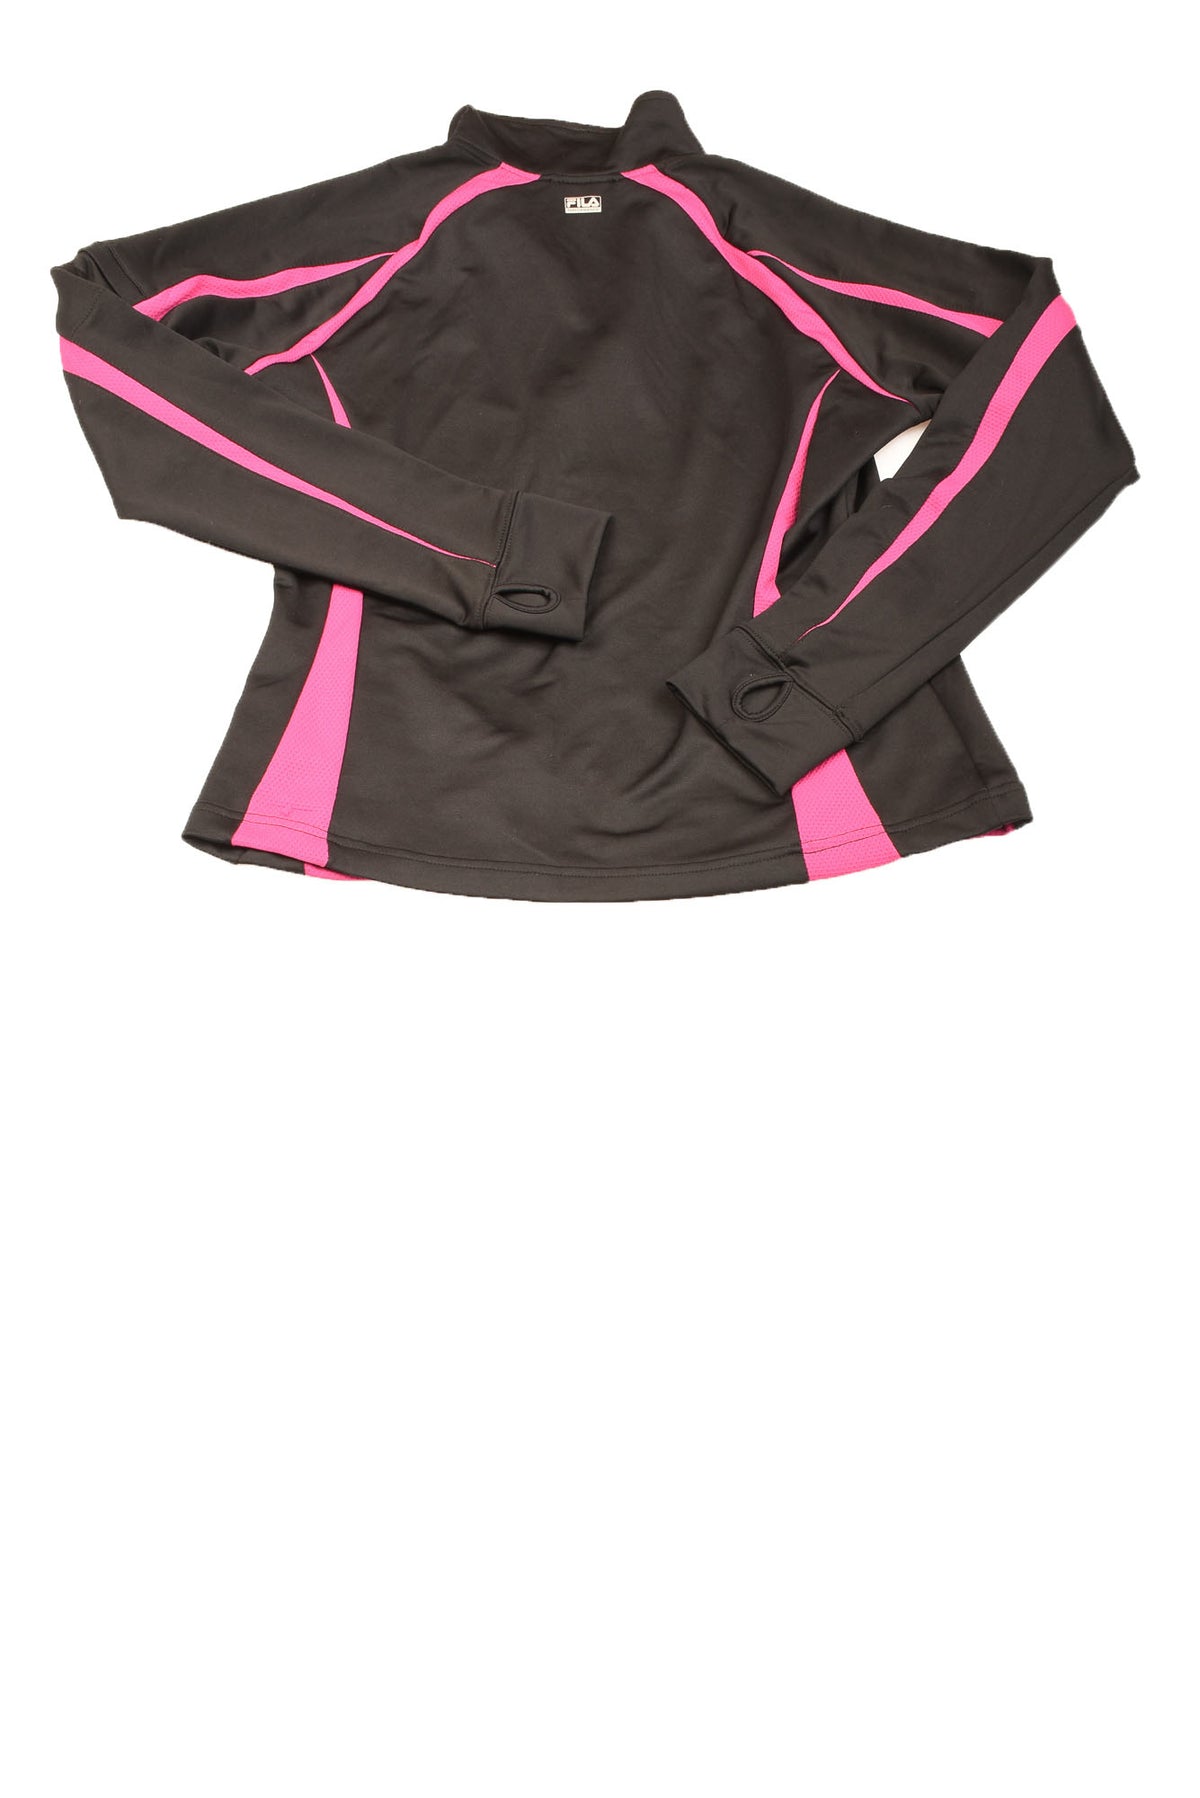 Fila Sport Size Large Women's Activewear Jacket - Your Designer Thrift